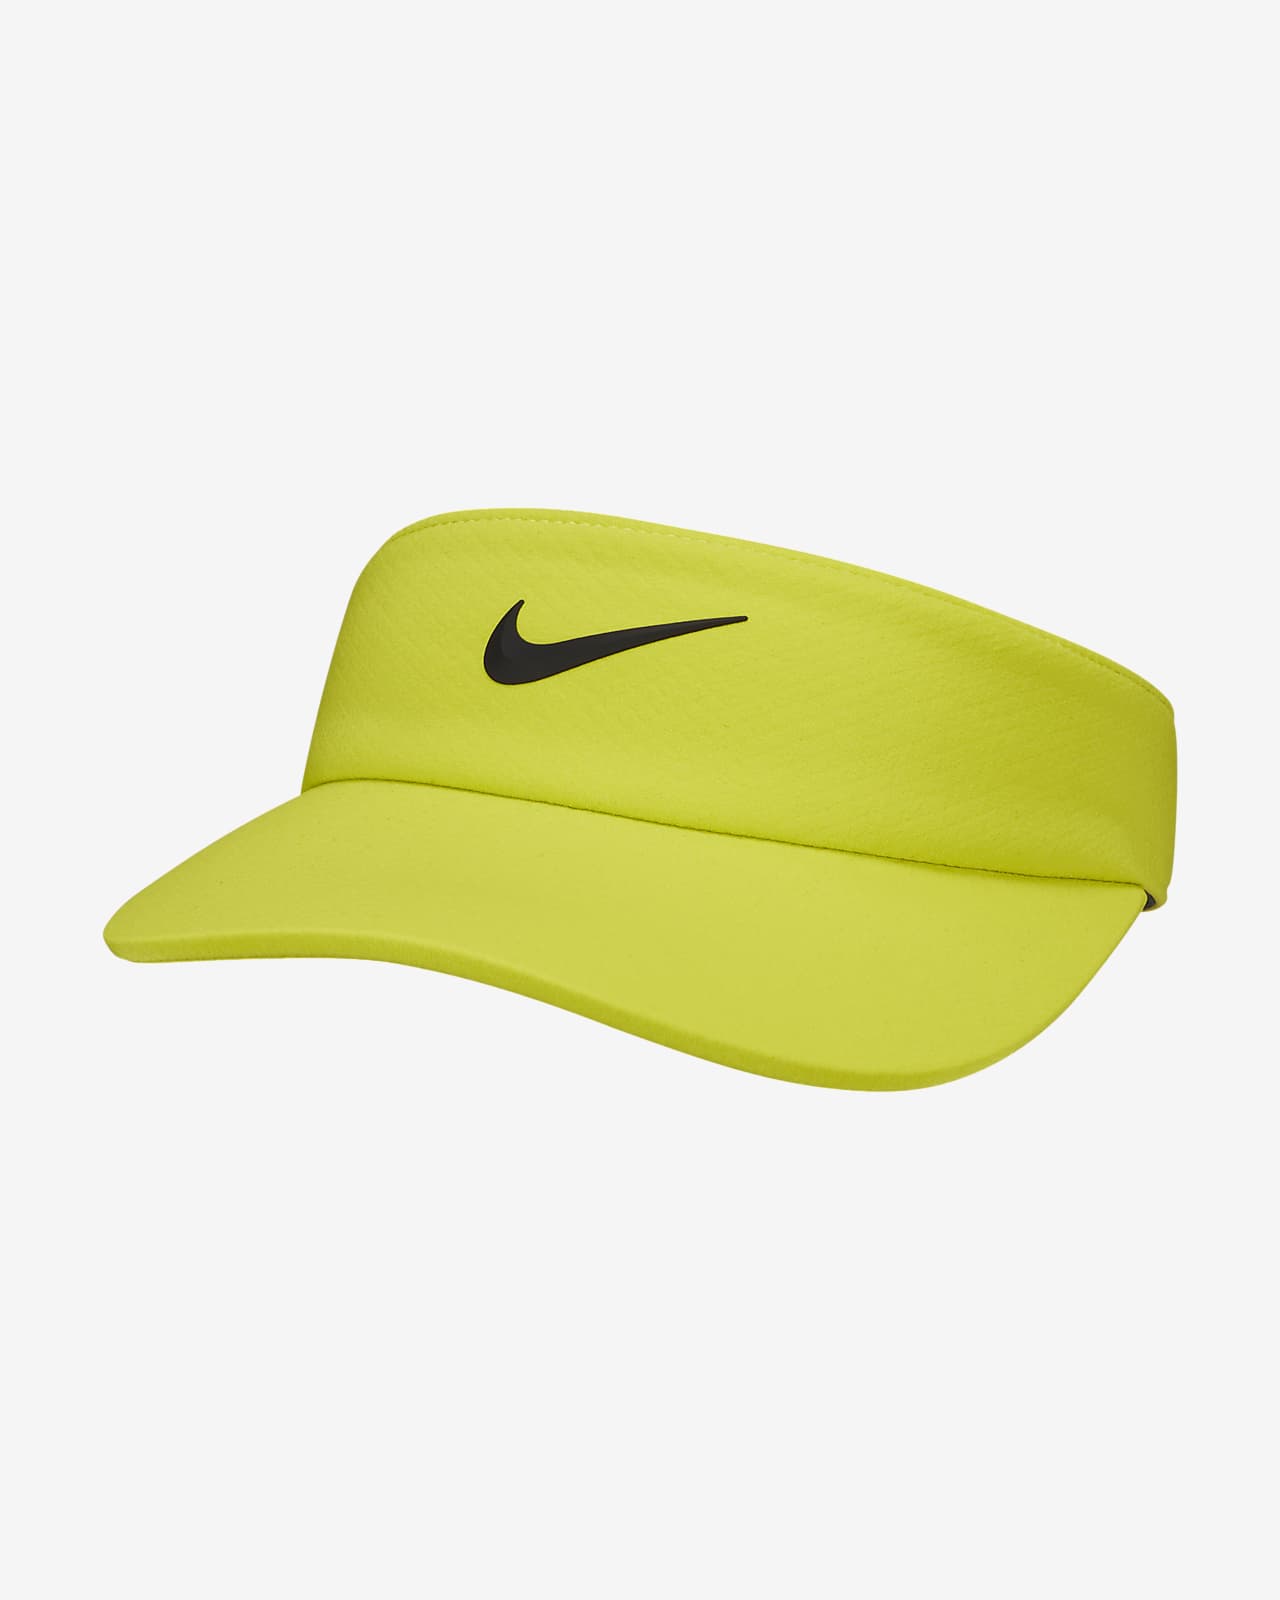 Nike Dri-FIT AeroBill Women's Golf Visor